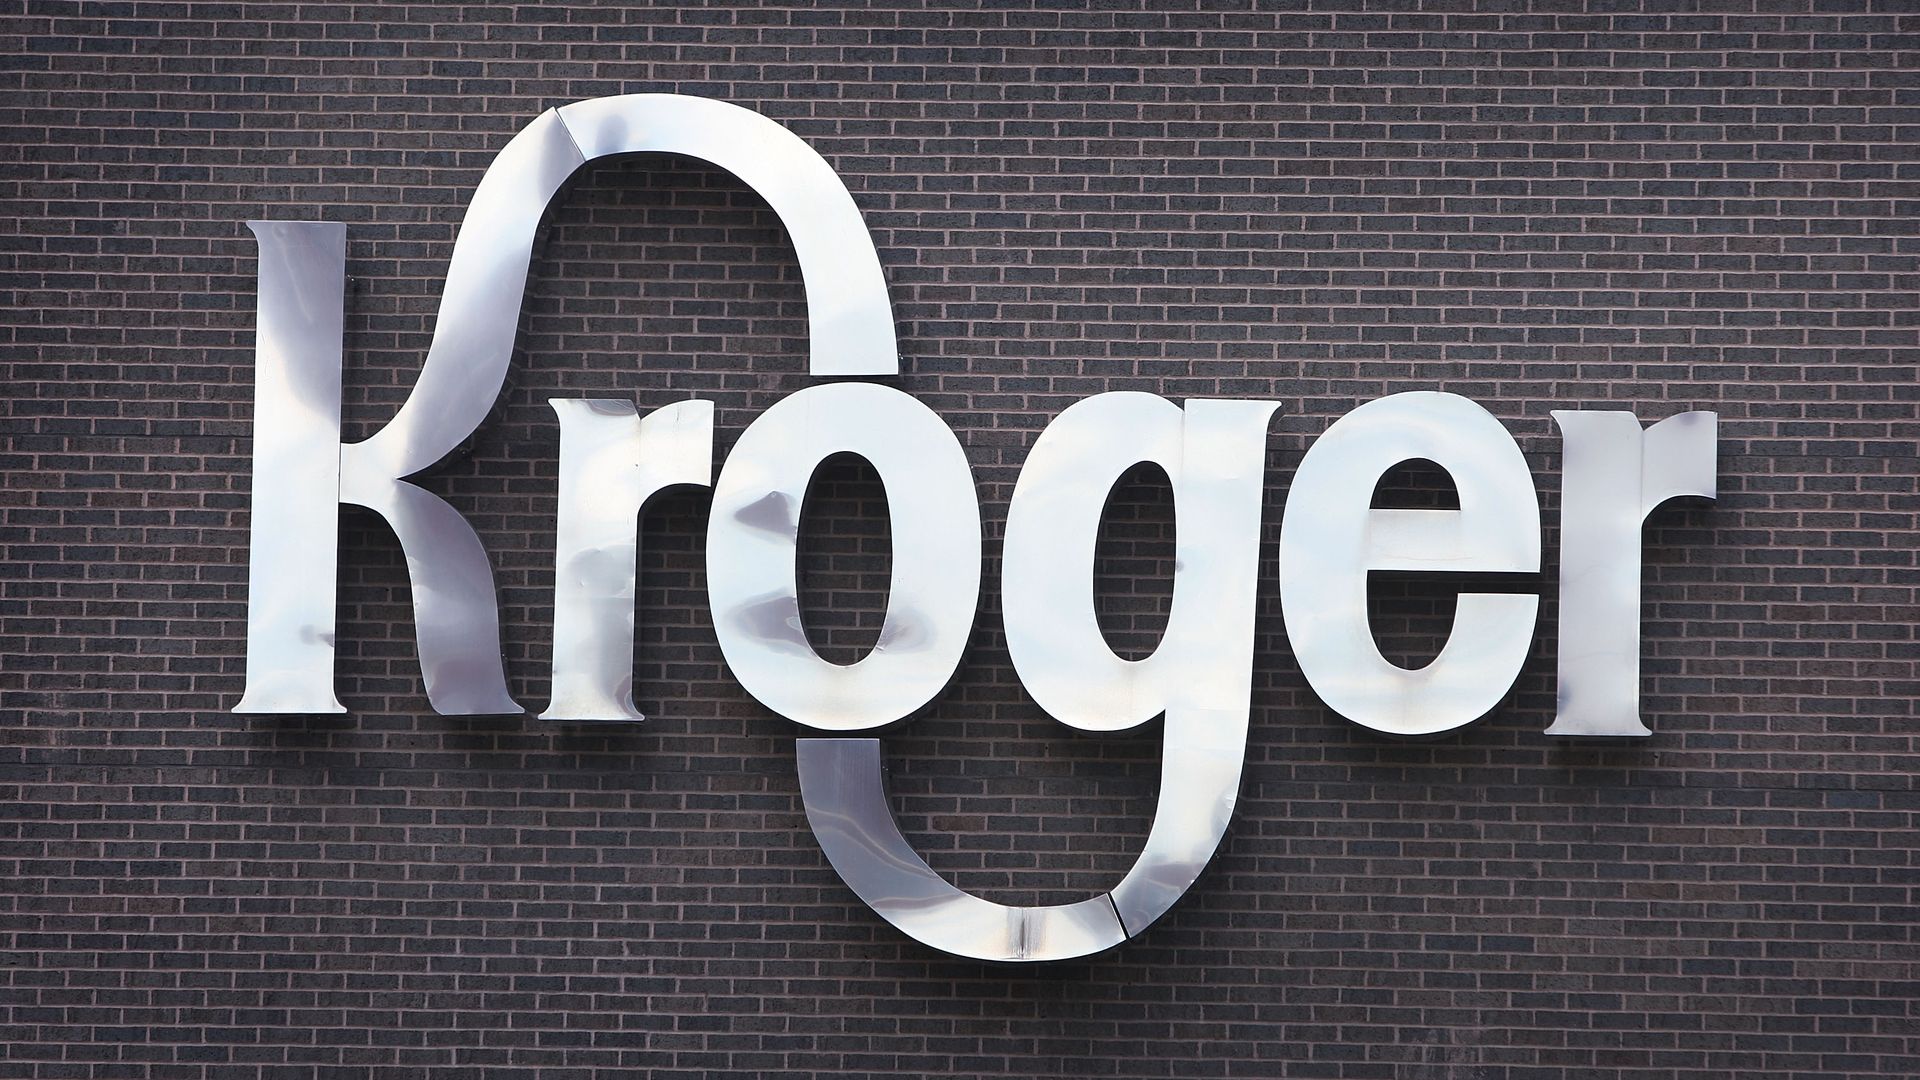 Kroger Co. corporate headquarters  in downtown Cincinnati, Ohio